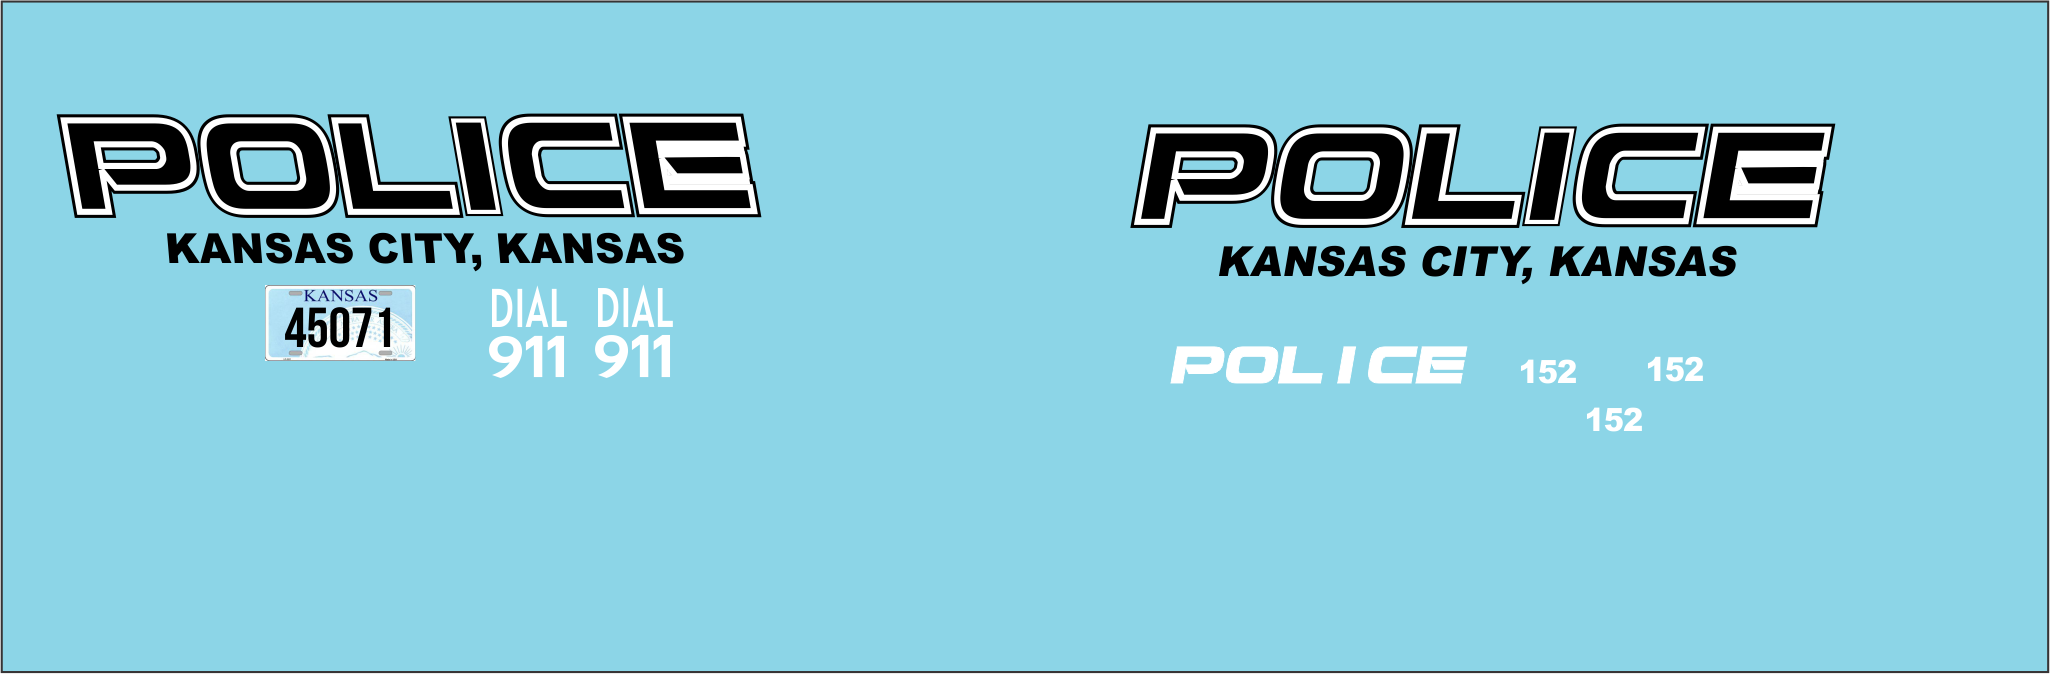 1/24-1/25 Kansas City, Kansas Police Department